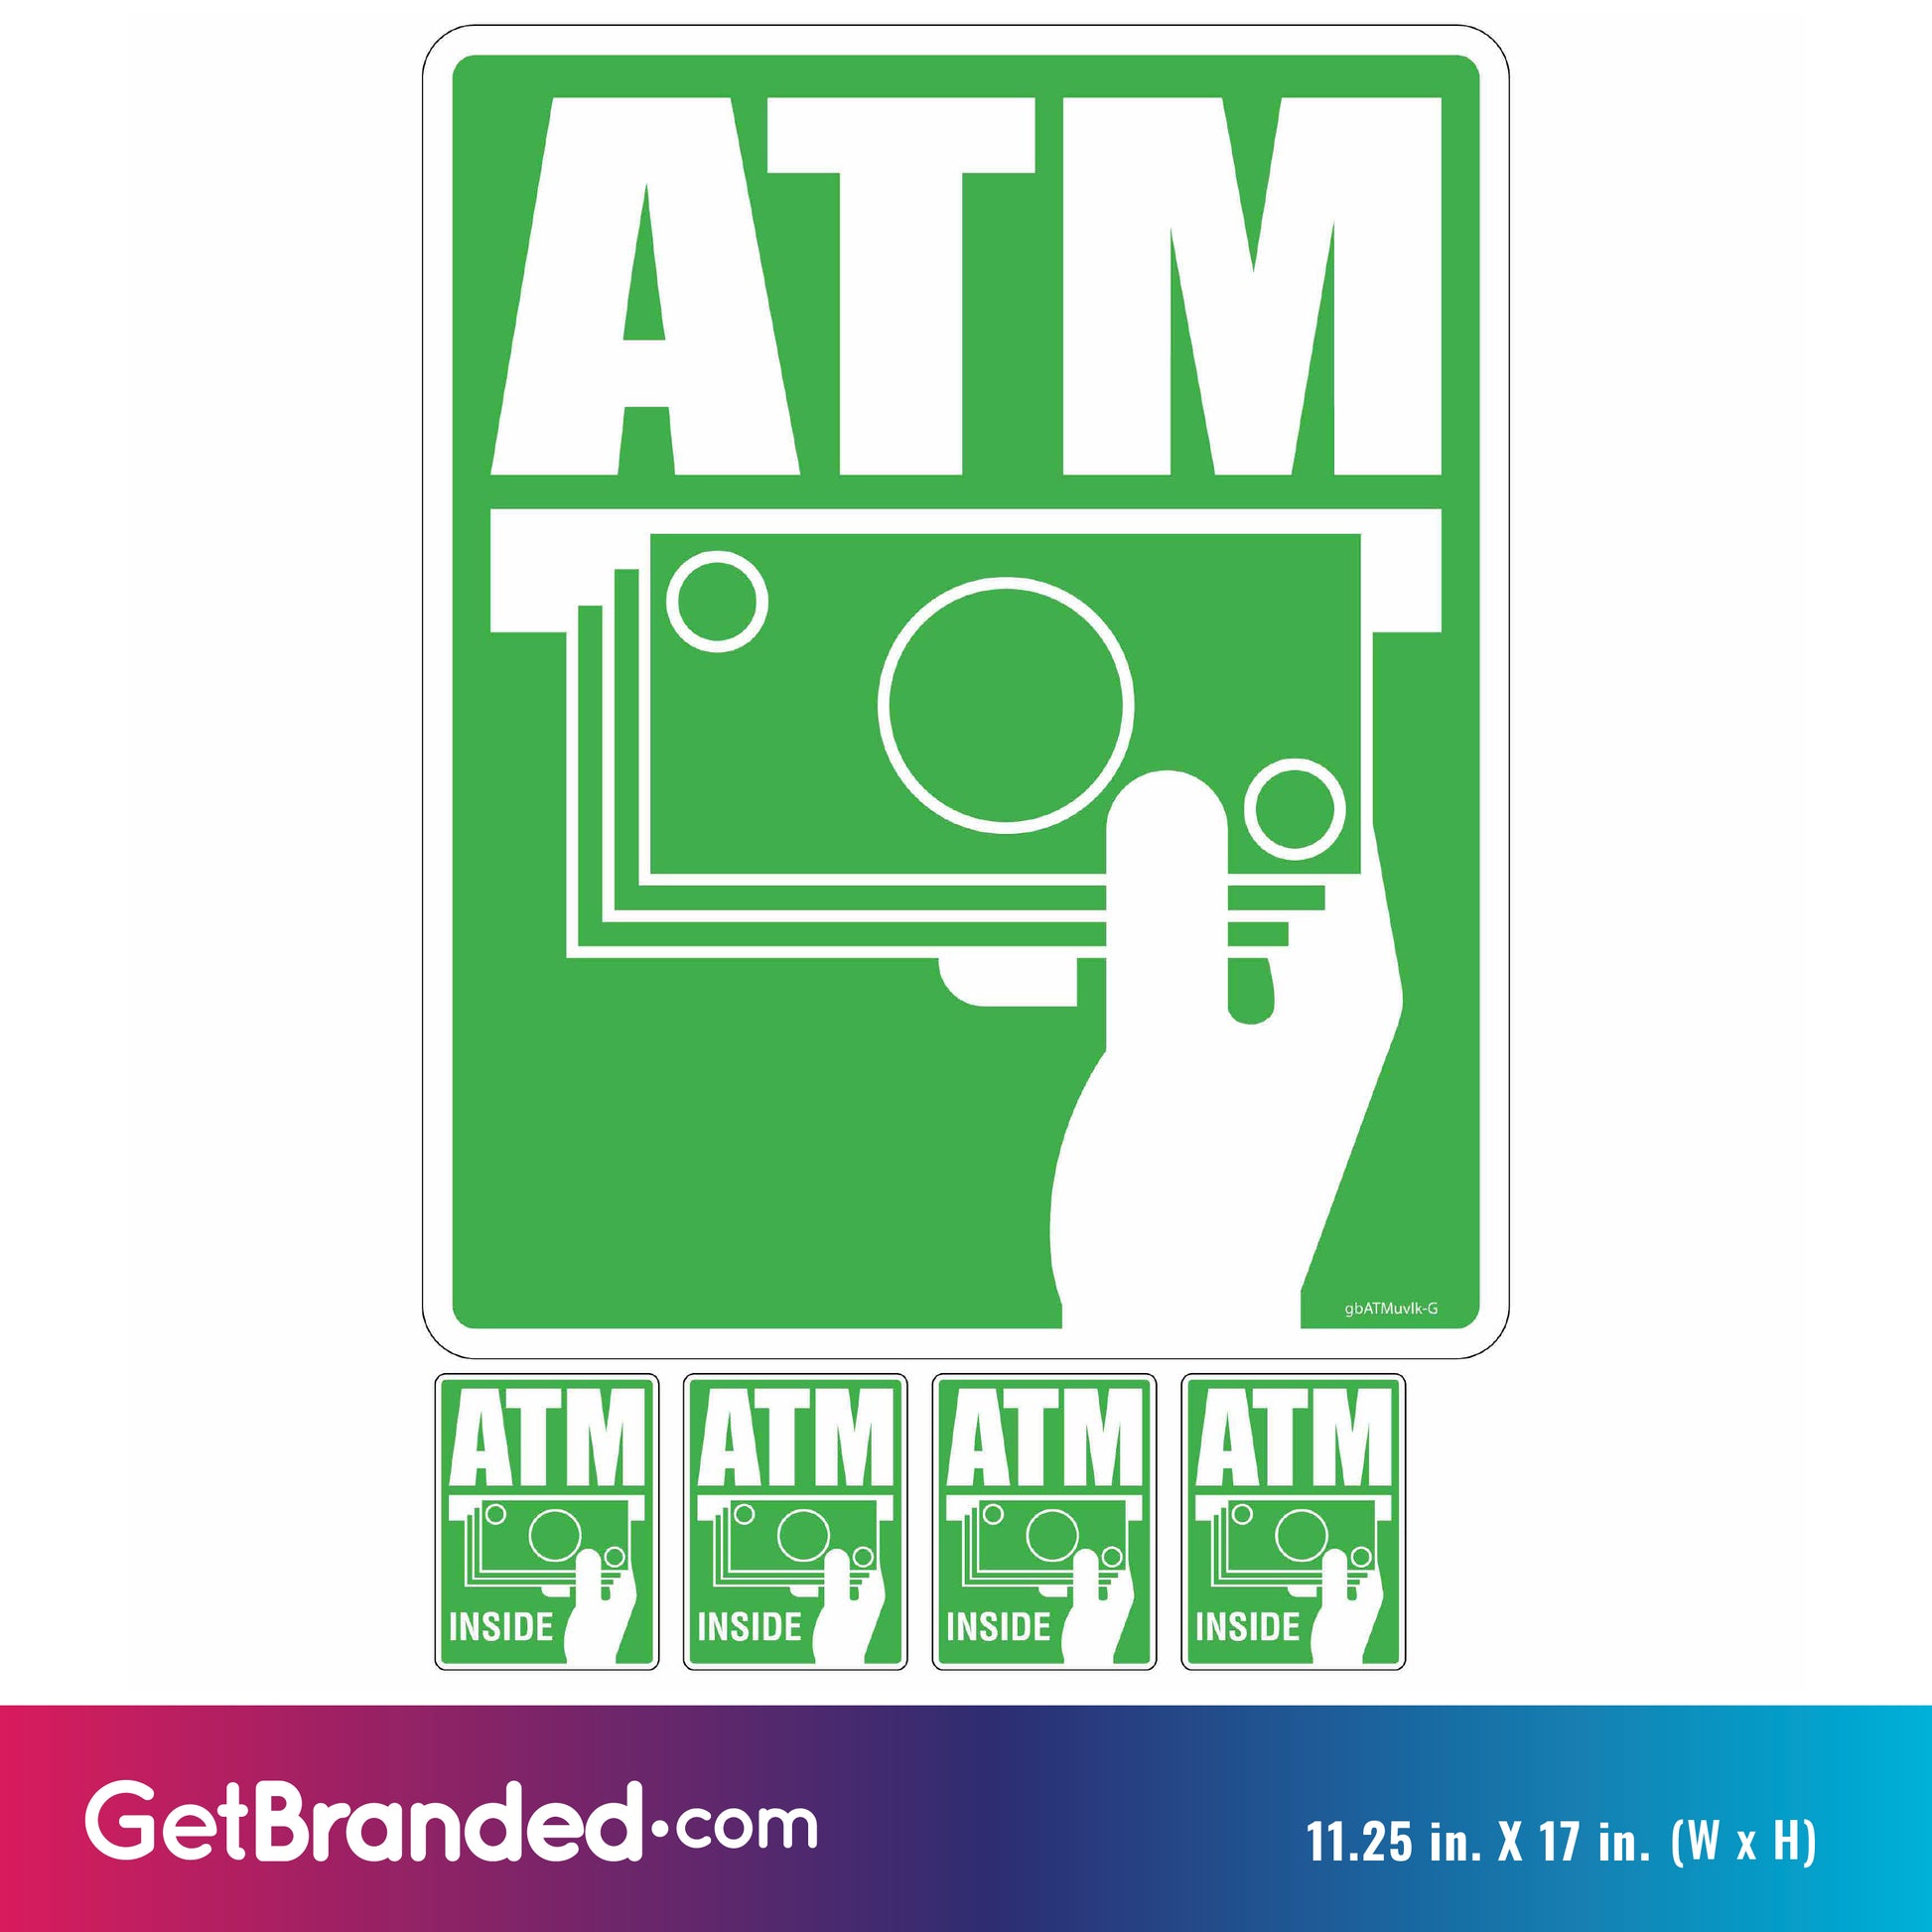 Green SharkSkin Universal ATM Decal Kit size guide.